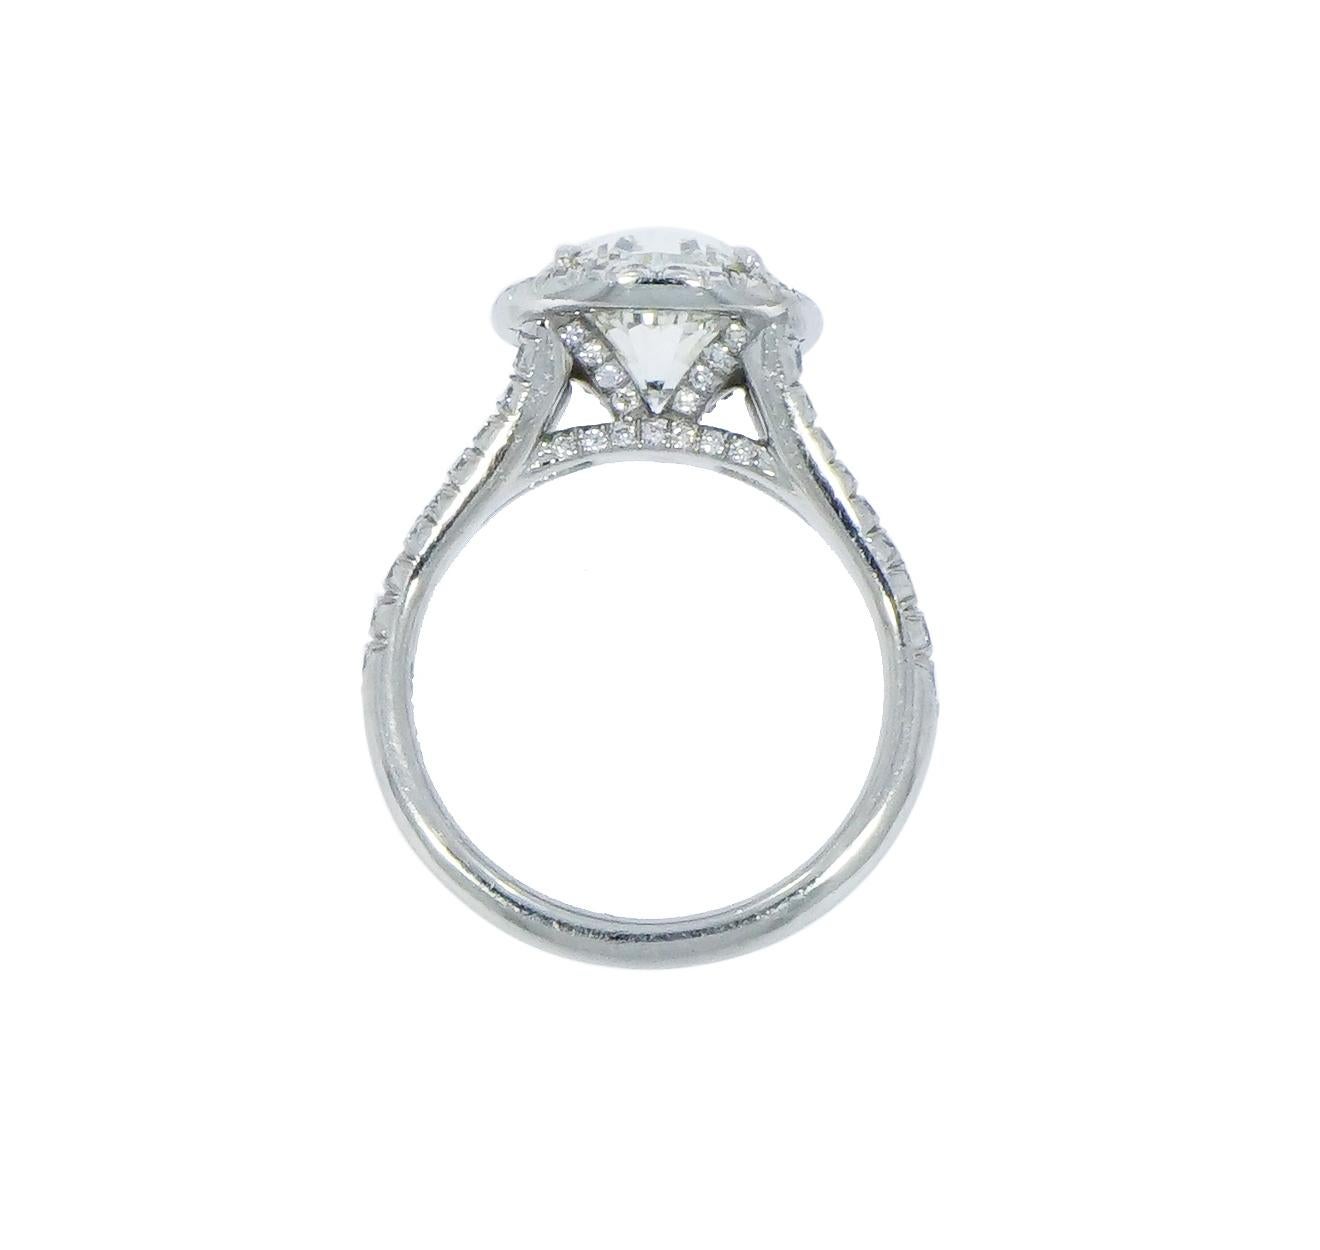 3.01 carat diamond ring